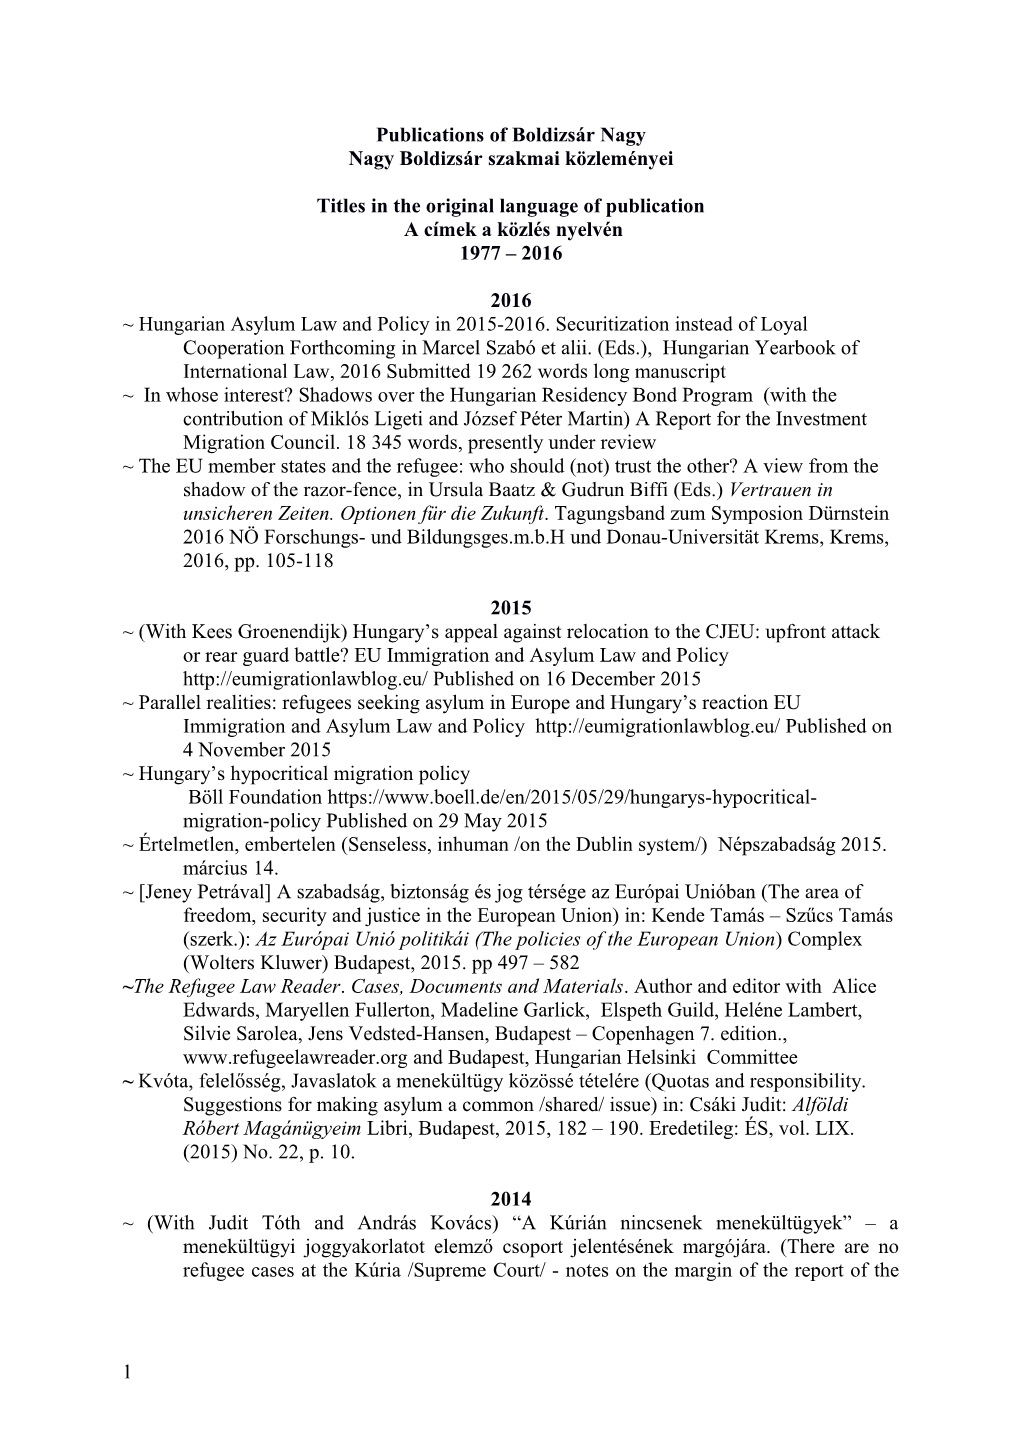 Titles in the Original Language of Publication